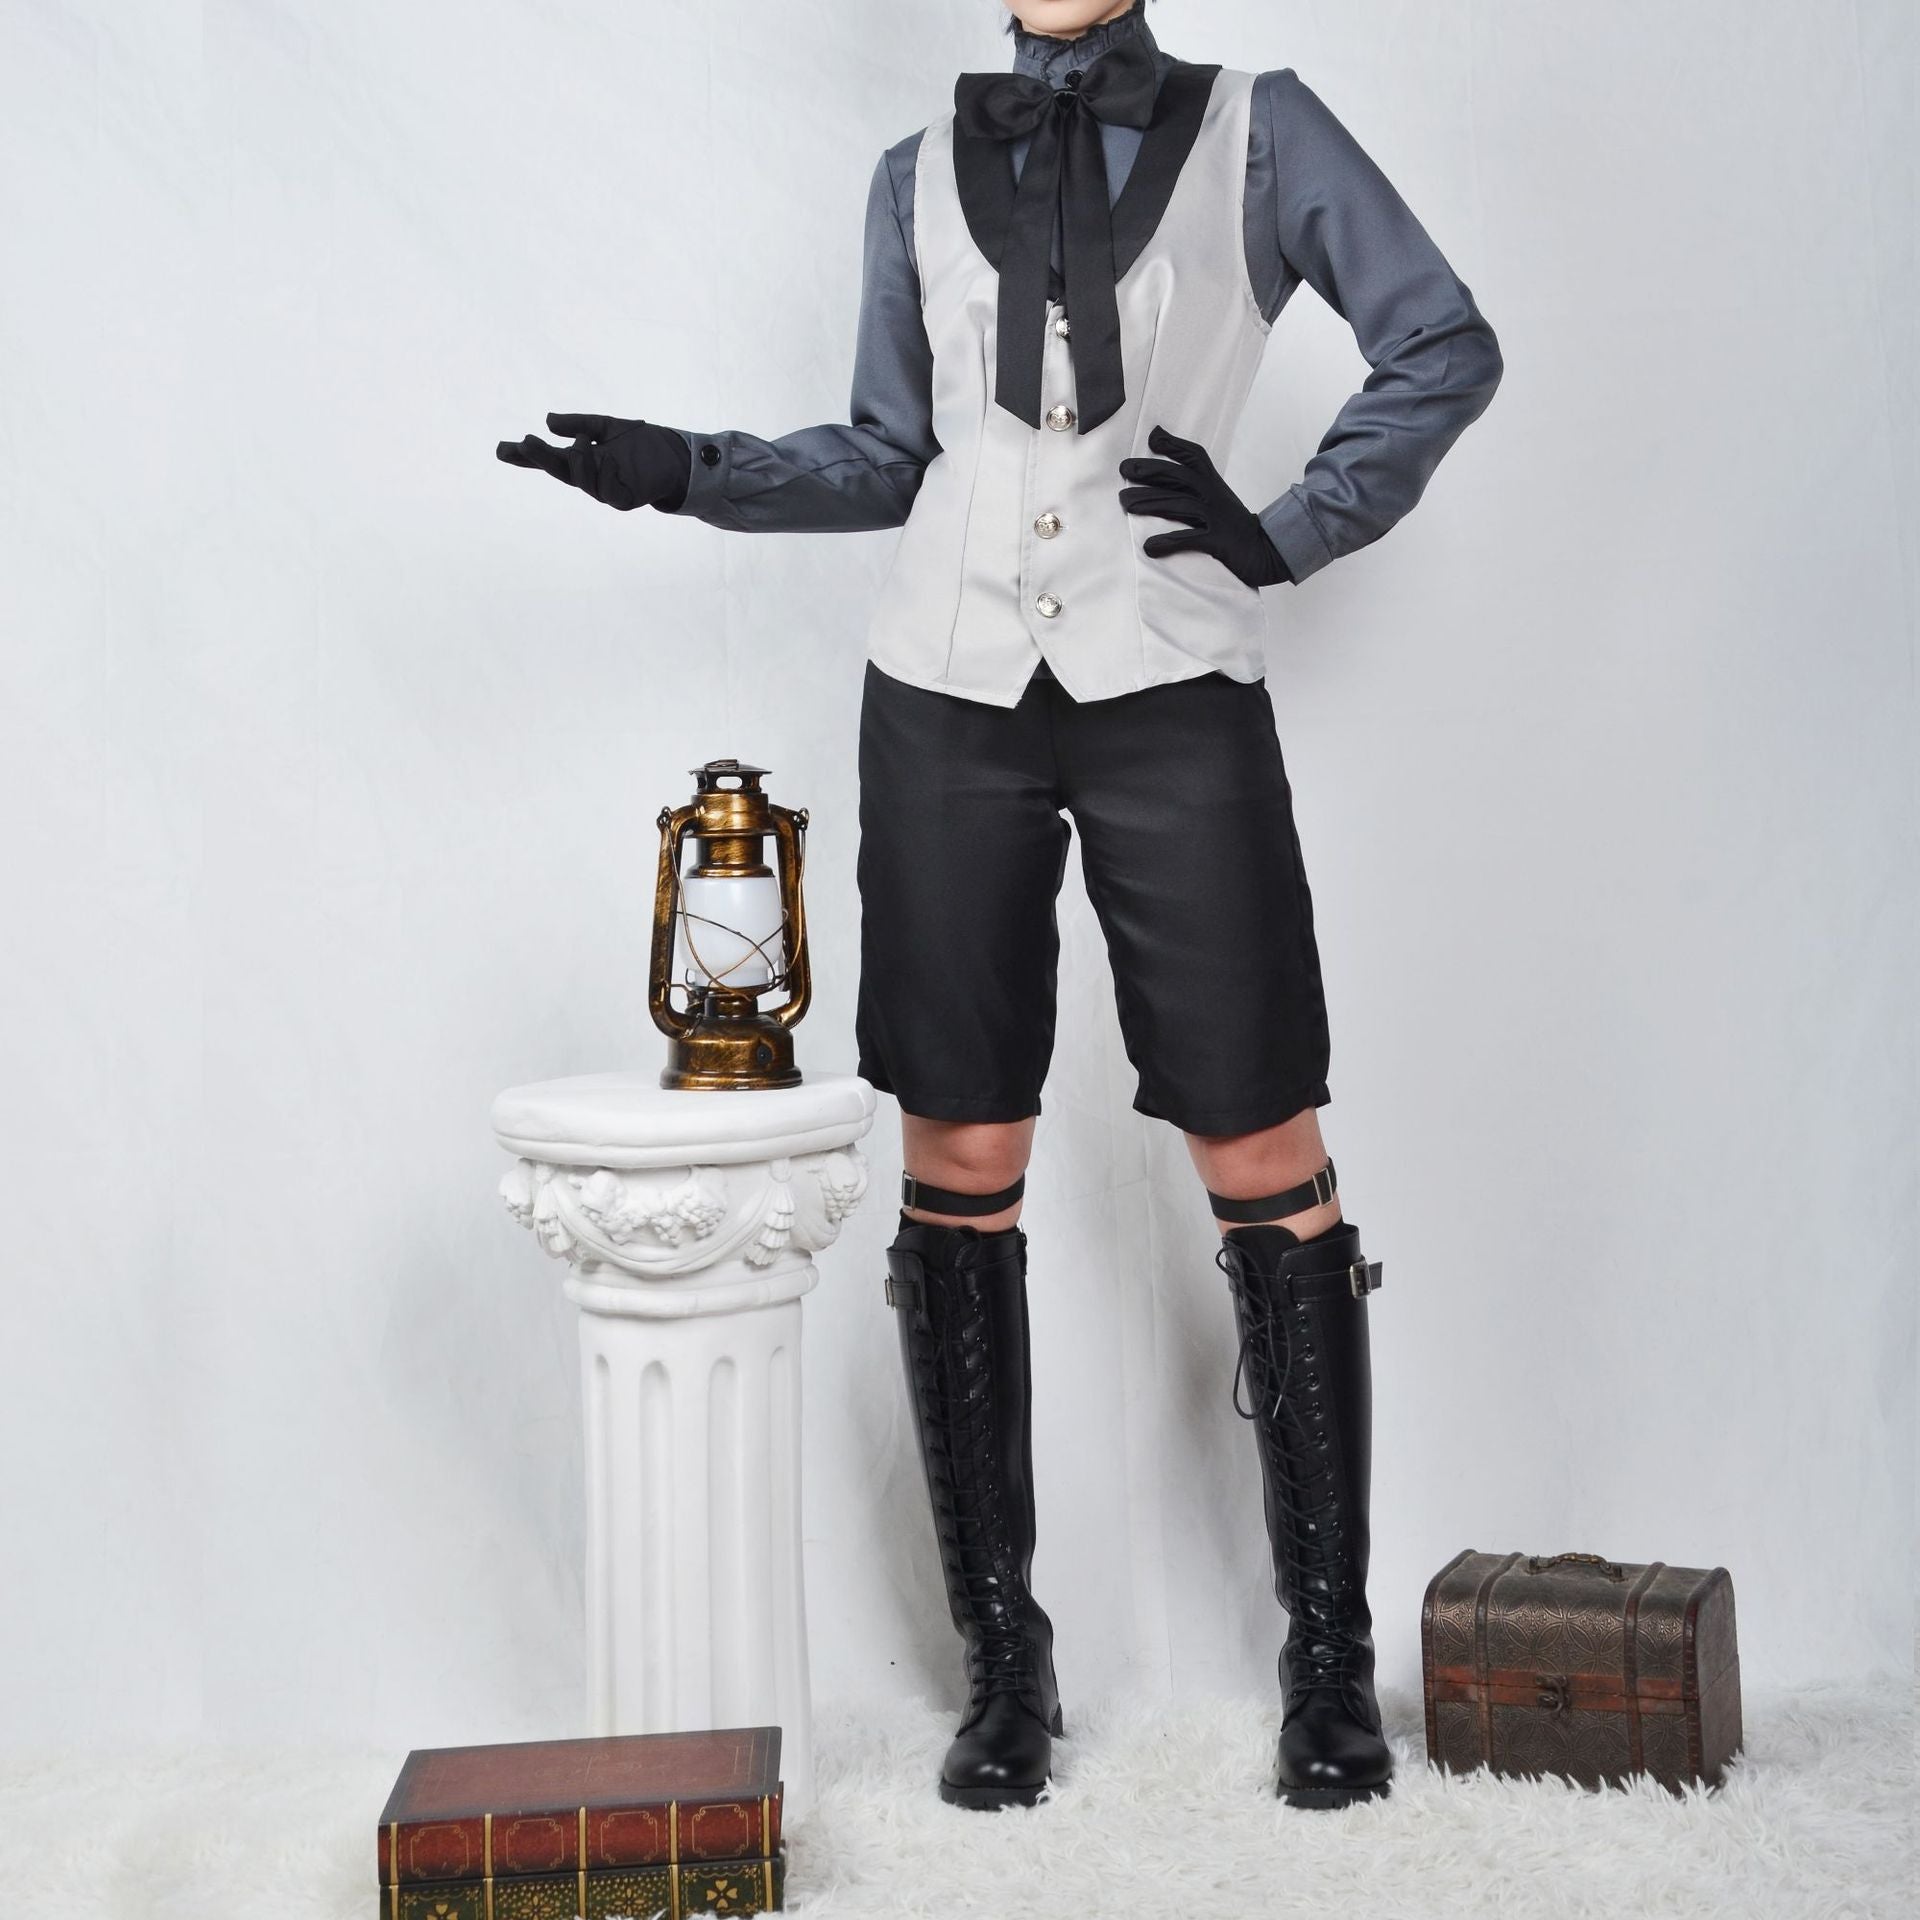 Black Butler Sebastian Michaelis Uniform Cosplay Halloween Karneval Kostüm